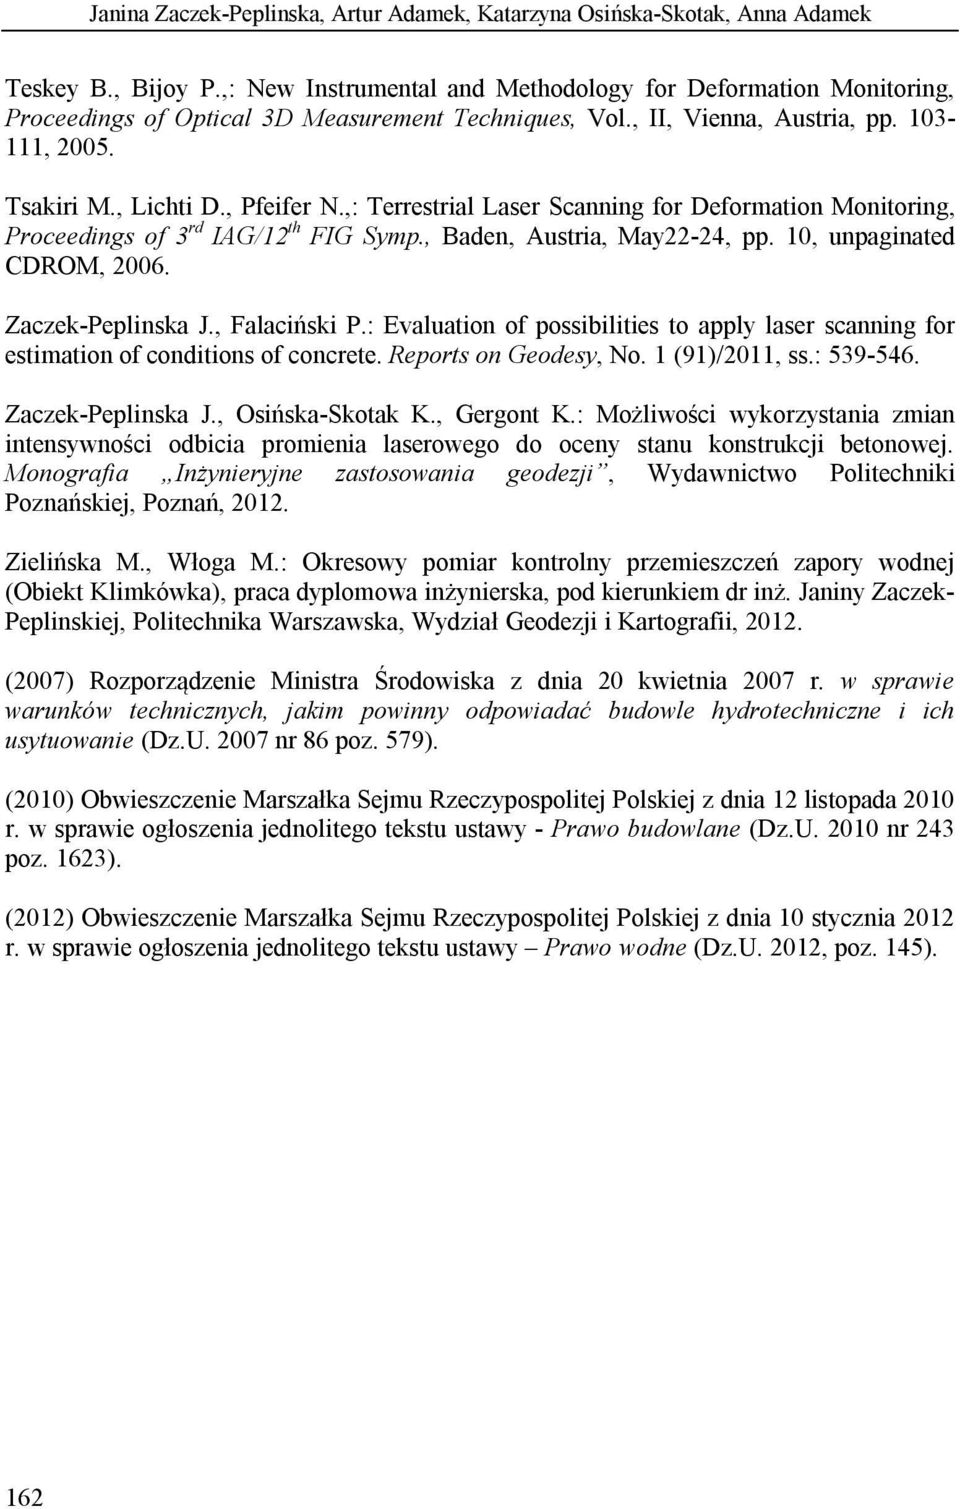 ,: Terrestrial Laser Scanning for Deformation Monitoring, Proceedings of 3 rd IAG/12 th FIG Symp., Baden, Austria, May22-24, pp. 10, unpaginated CDROM, 2006. Zaczek-Peplinska J., Falaciński P.